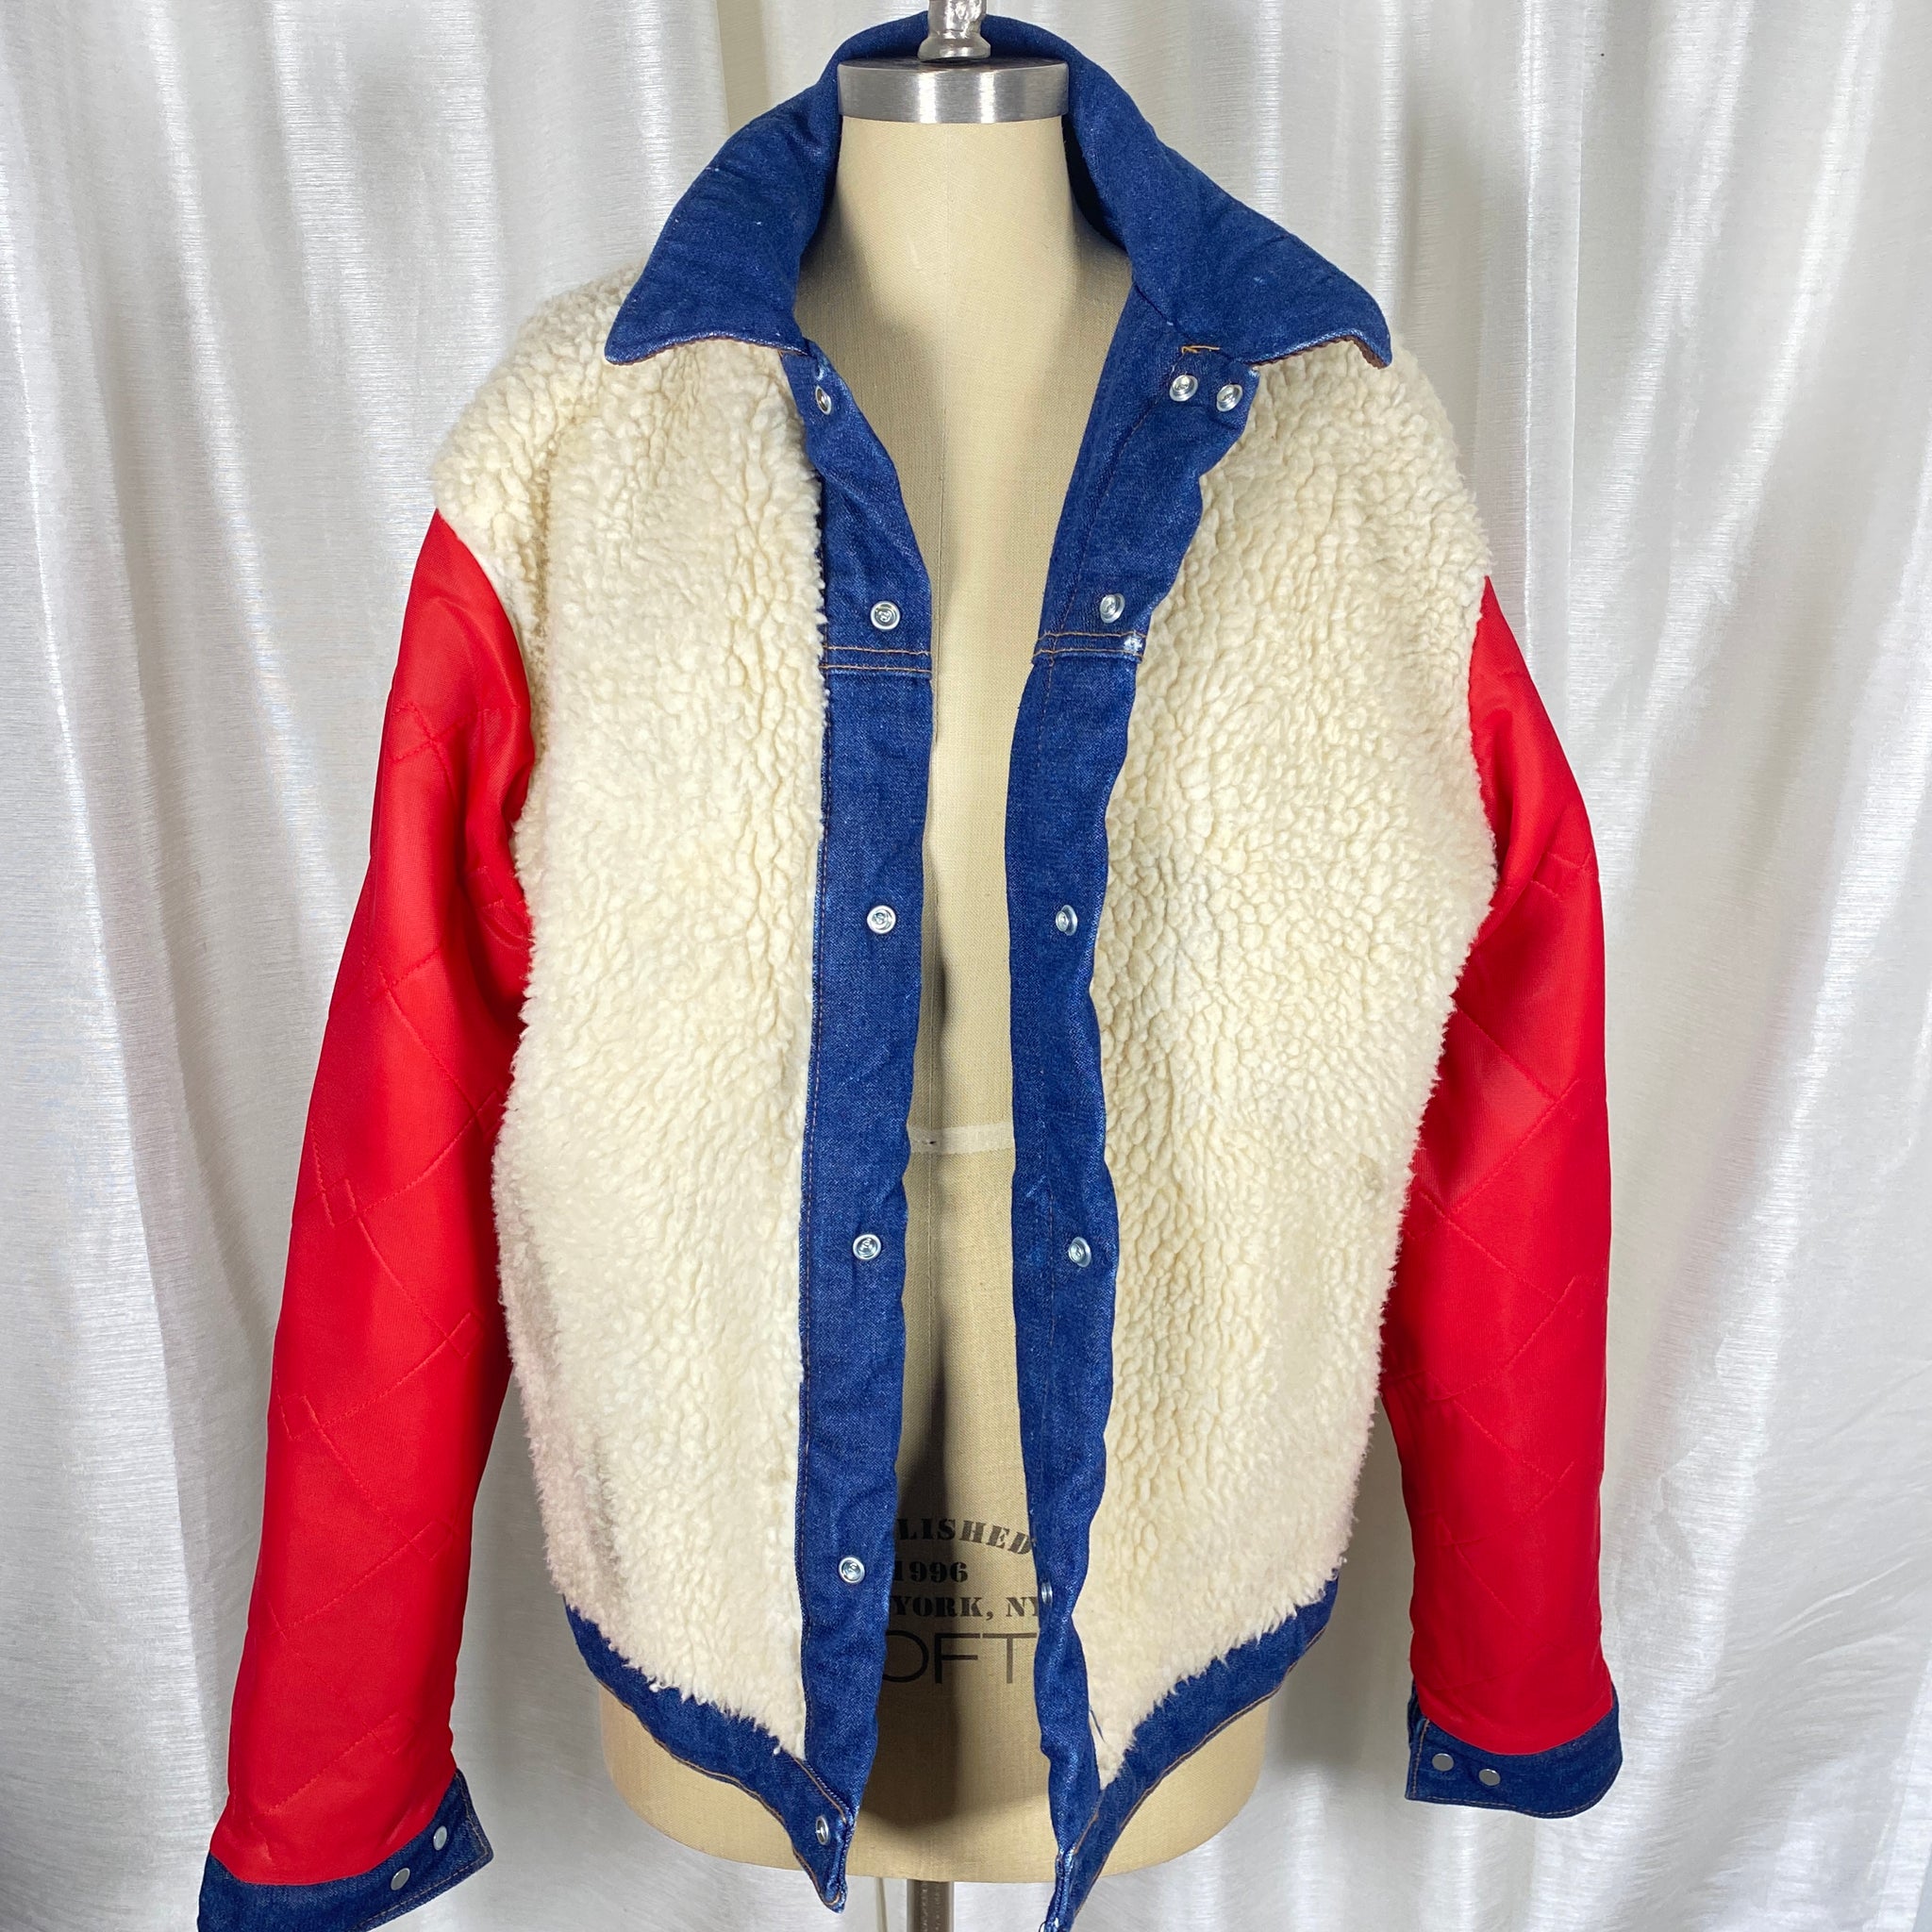 Vintage Key Imperial Denim/Sherpa coat unisex - L